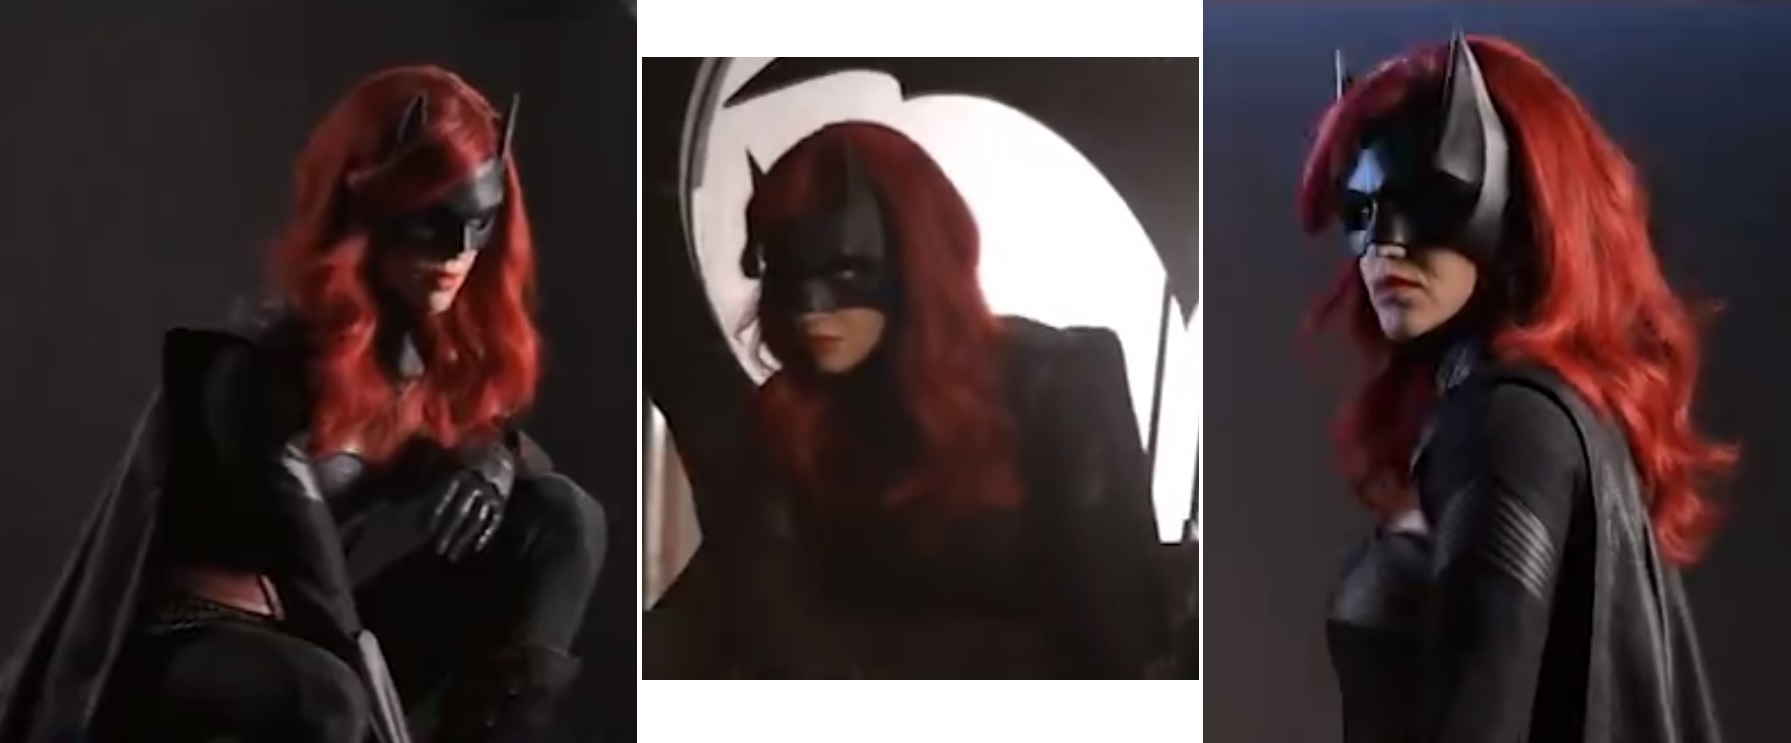 BatwomanPreLaunch.jpg